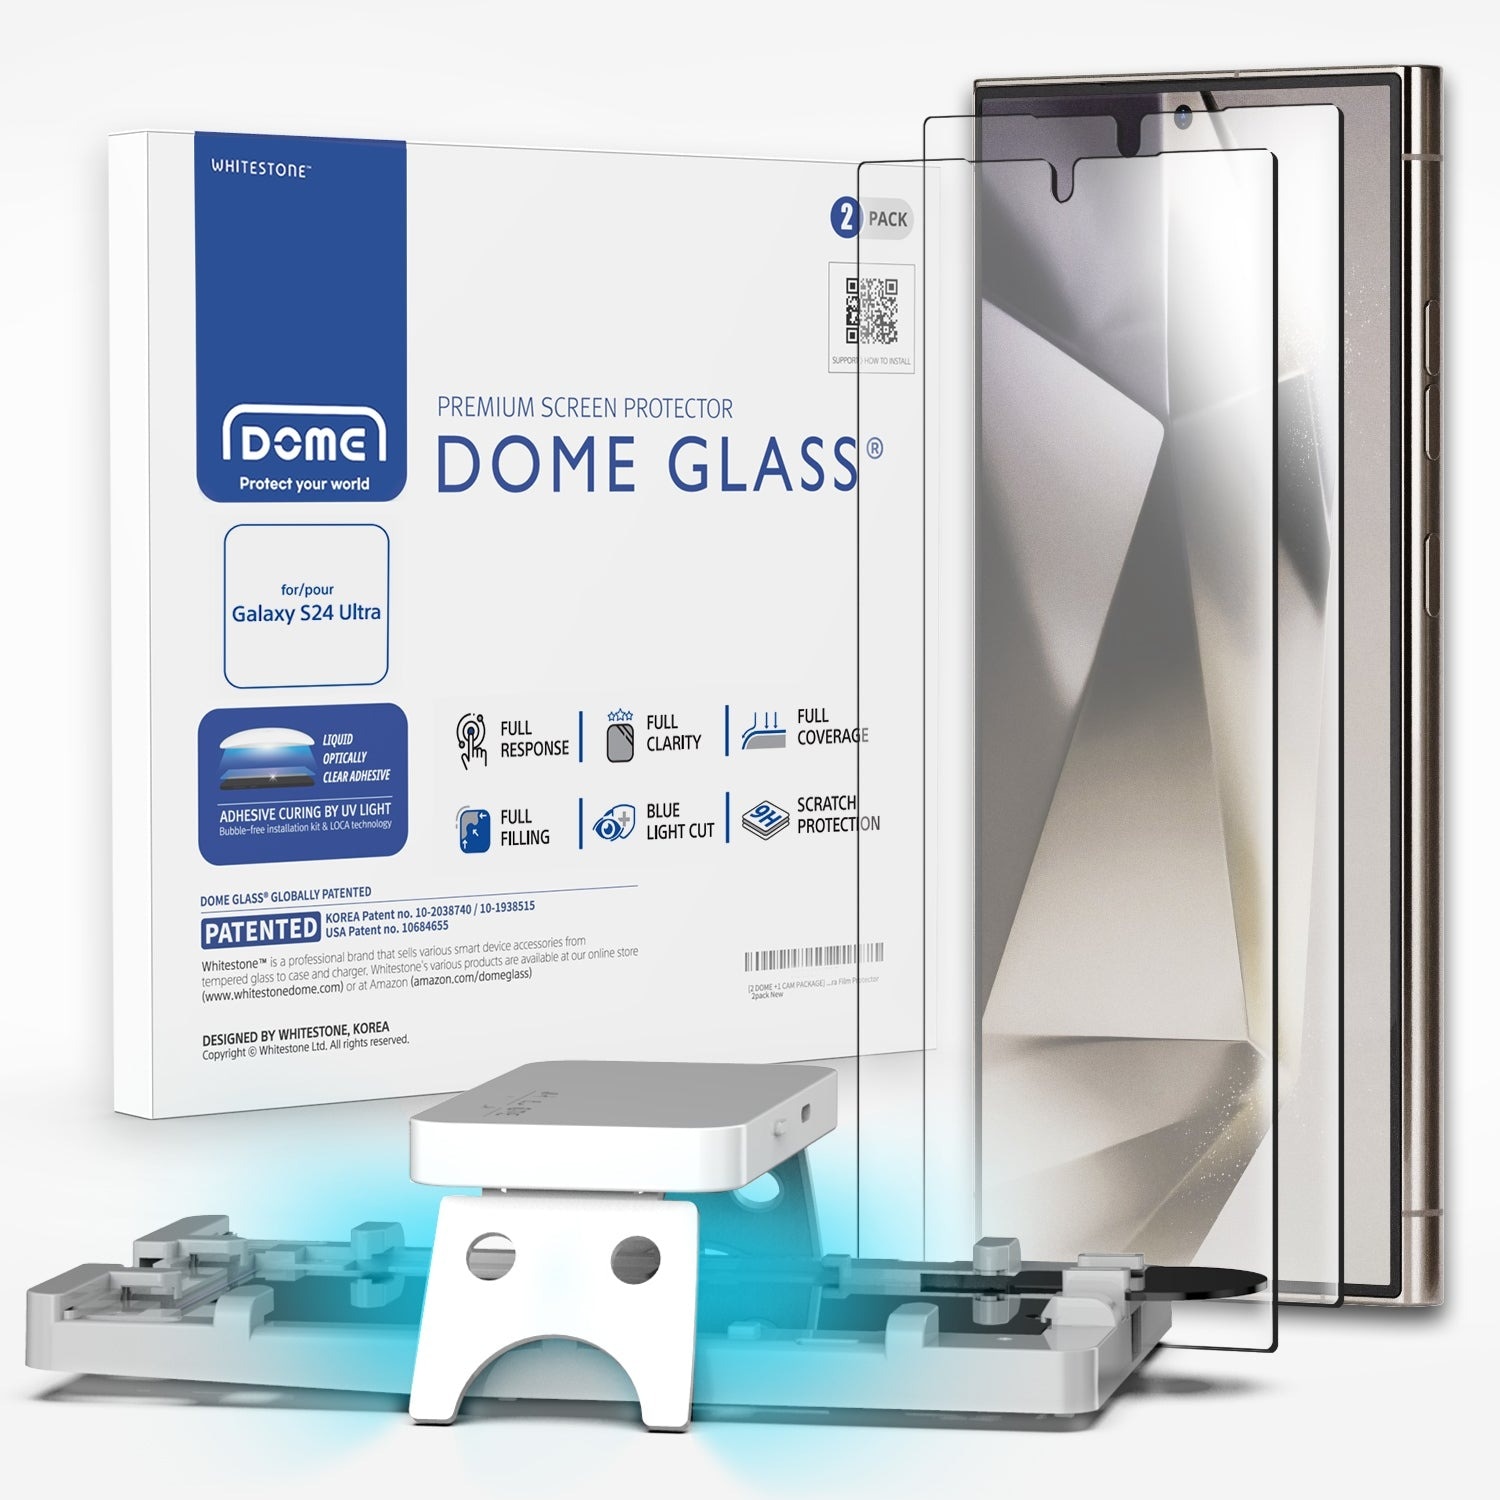 Whitestone Samsung Galaxy S24 Ultra Dome Glass Screen Protector (2-pack)